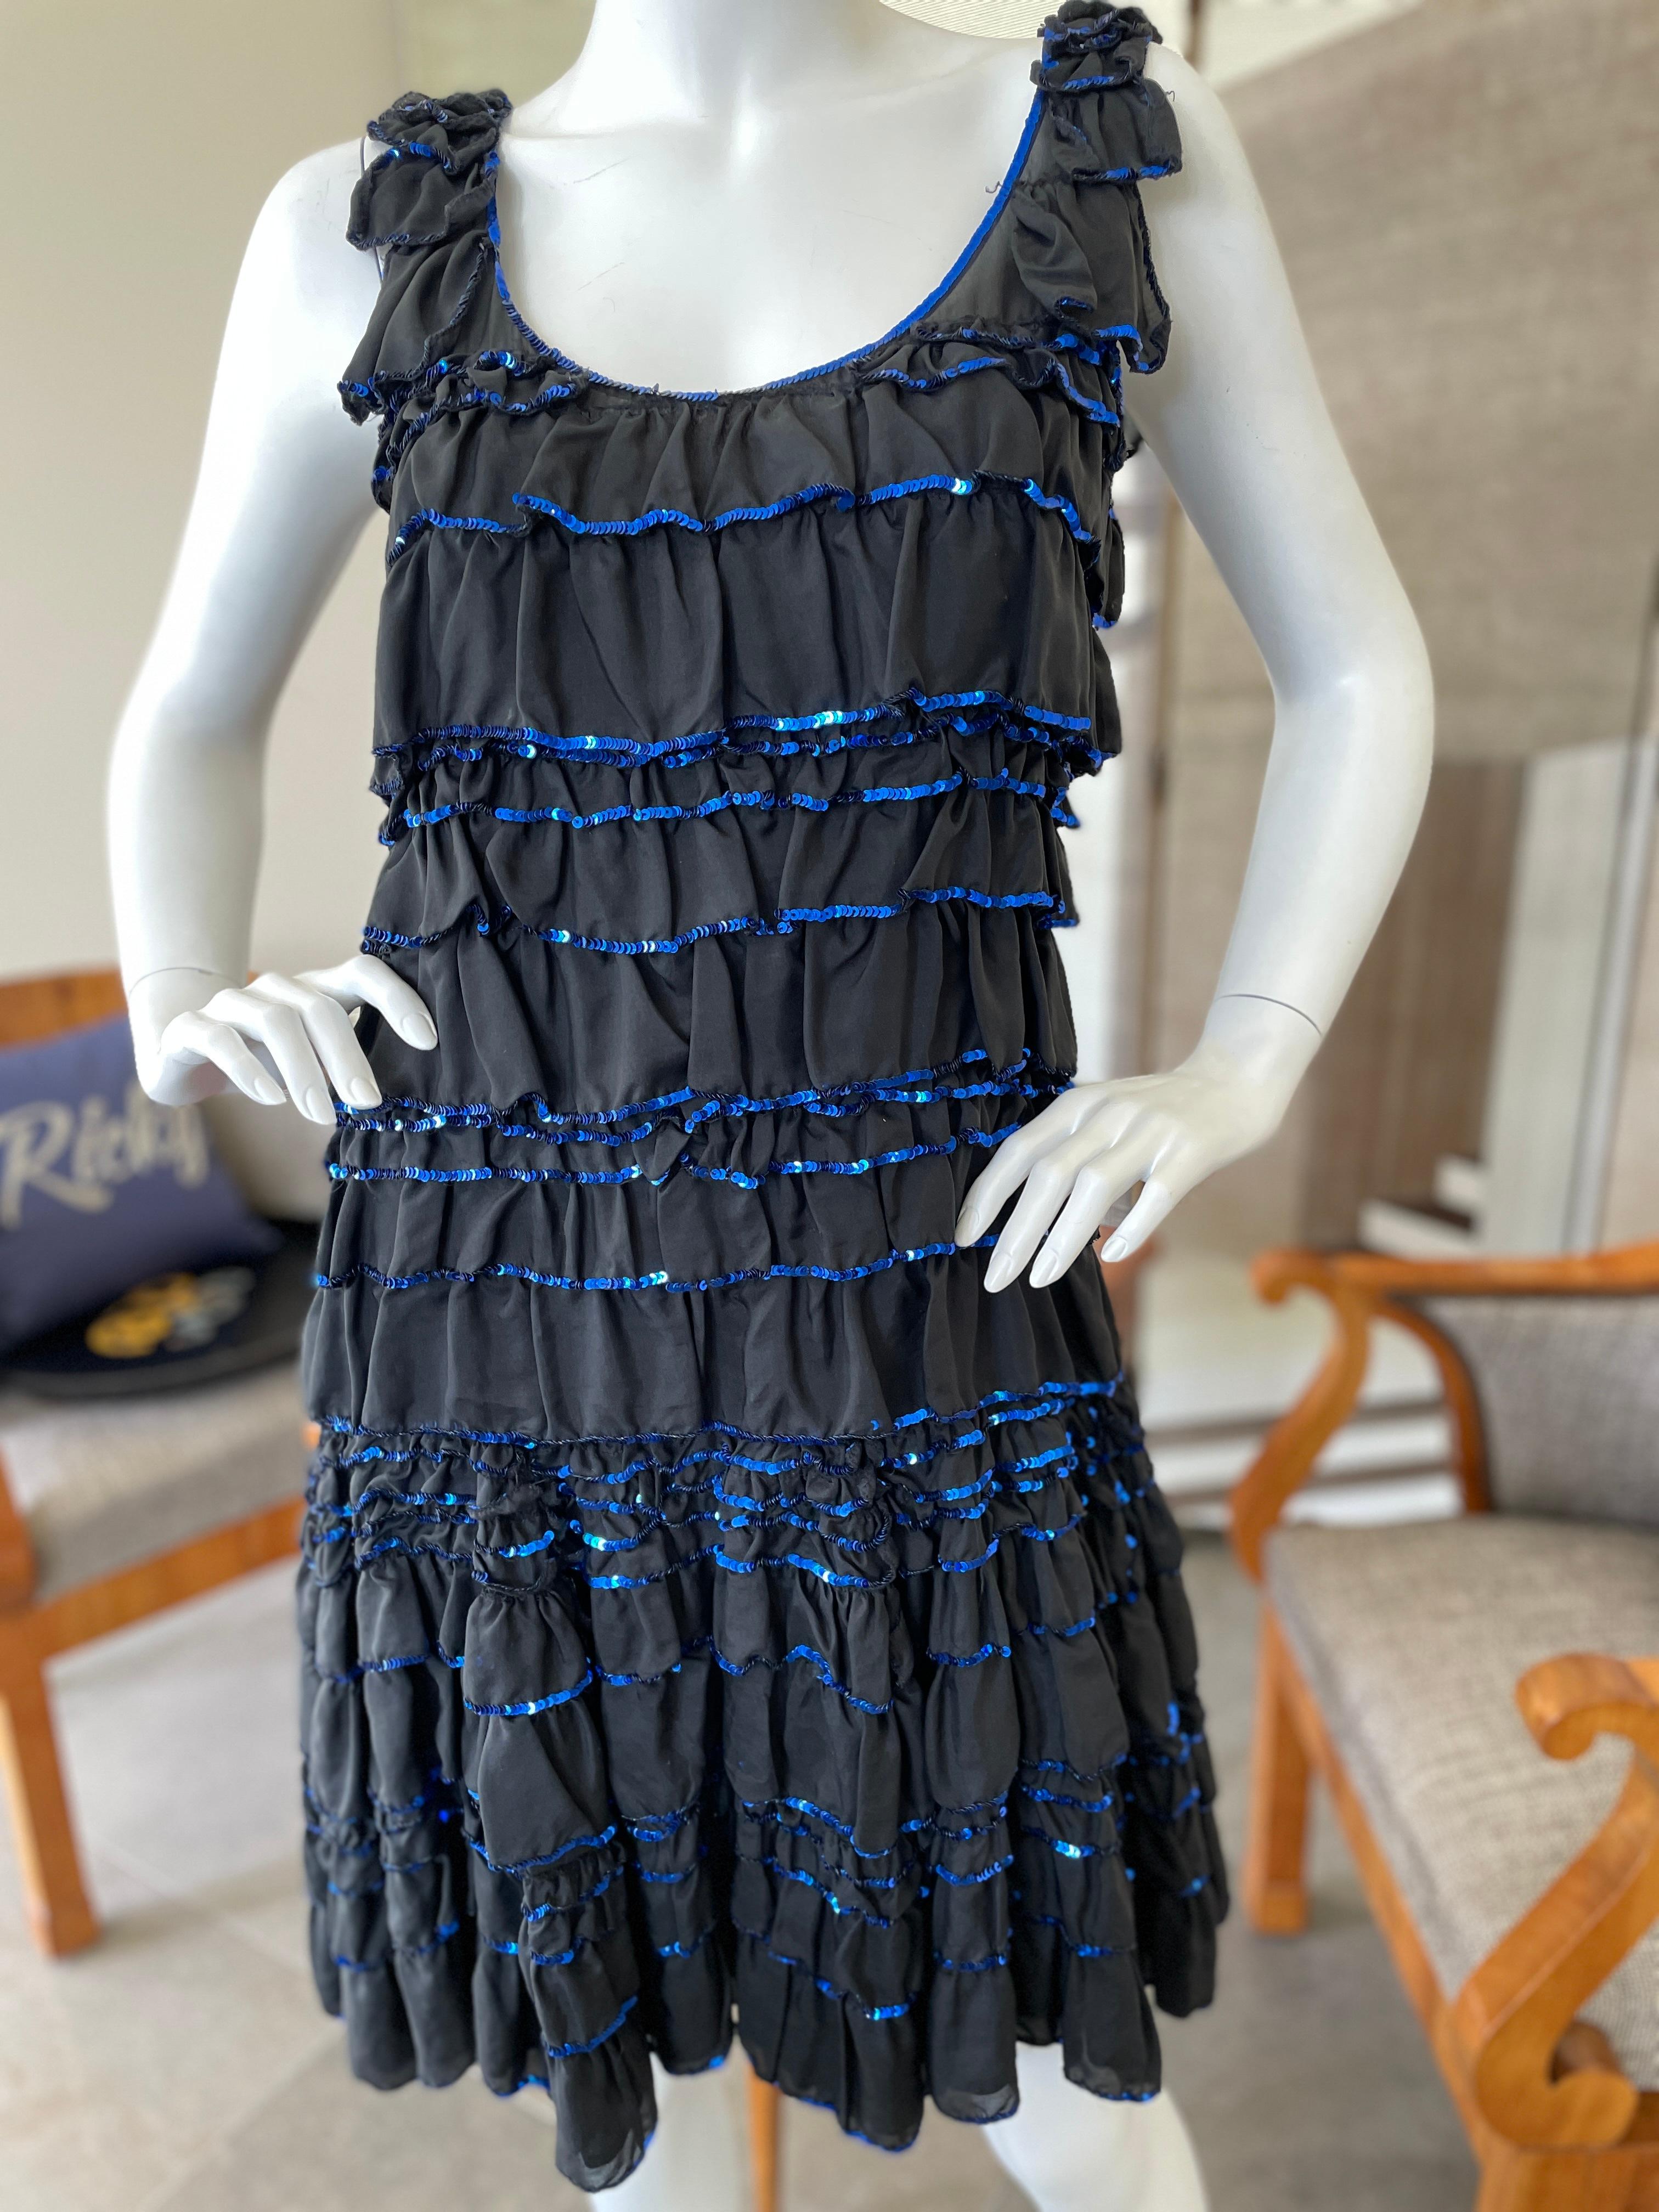 Lanvin by Alber Elbaz Ete 2004 Black Ruffle Cocktail Dress with Blue Sequin Trim For Sale 1